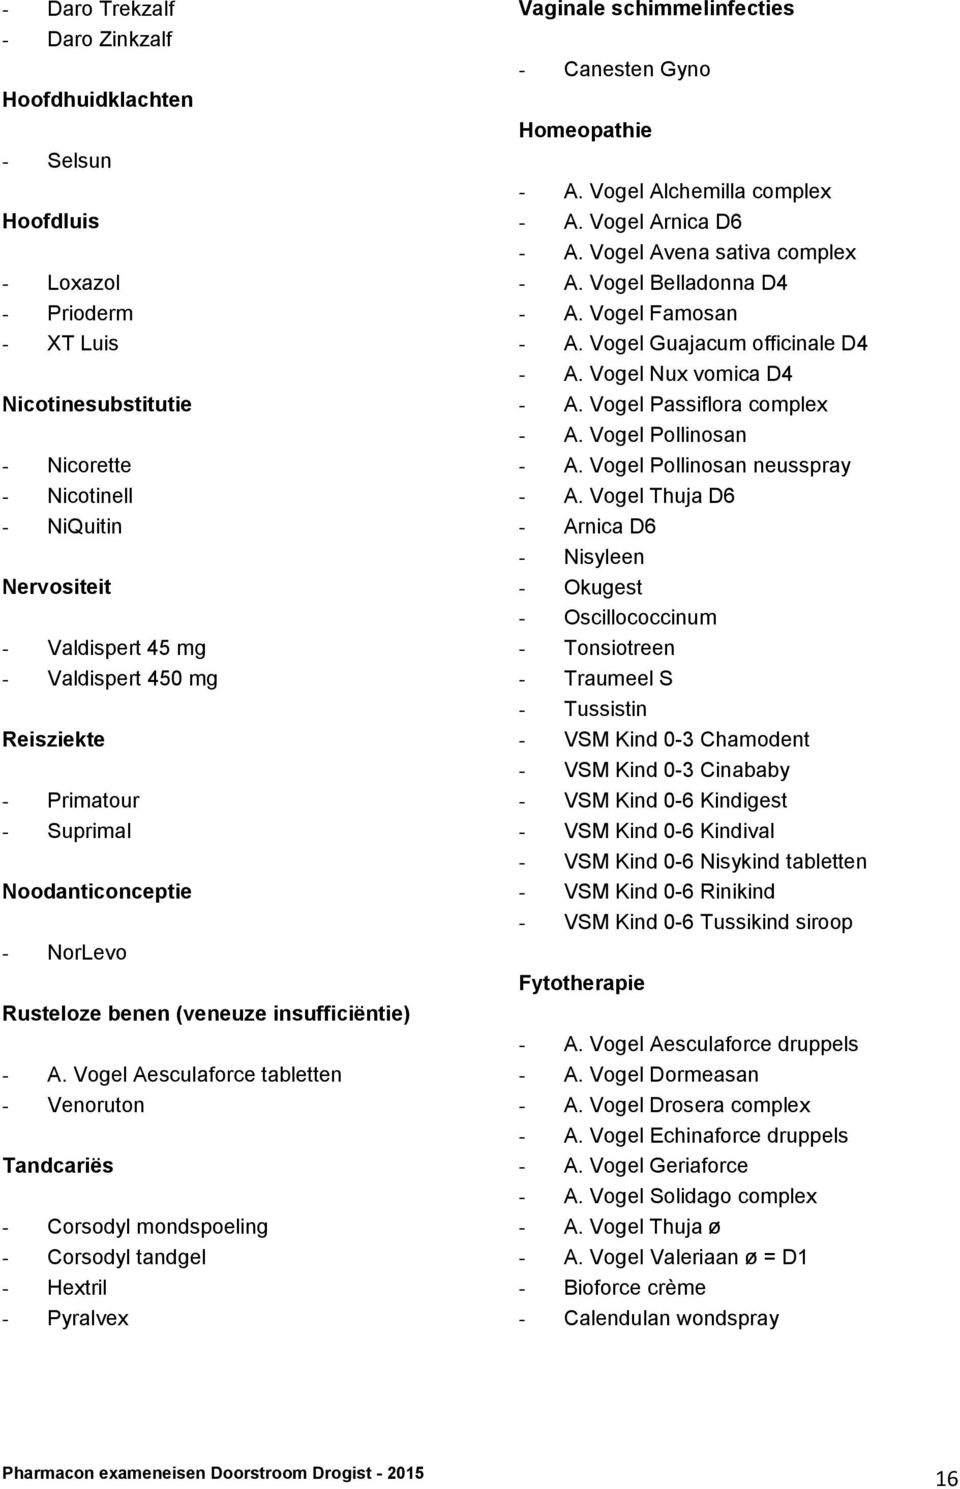 Vogel Aesculaforce tabletten - Venoruton Tandcariës - Corsodyl mondspoeling - Corsodyl tandgel - Hextril - Pyralvex Vaginale schimmelinfecties - Canesten Gyno Homeopathie - A.